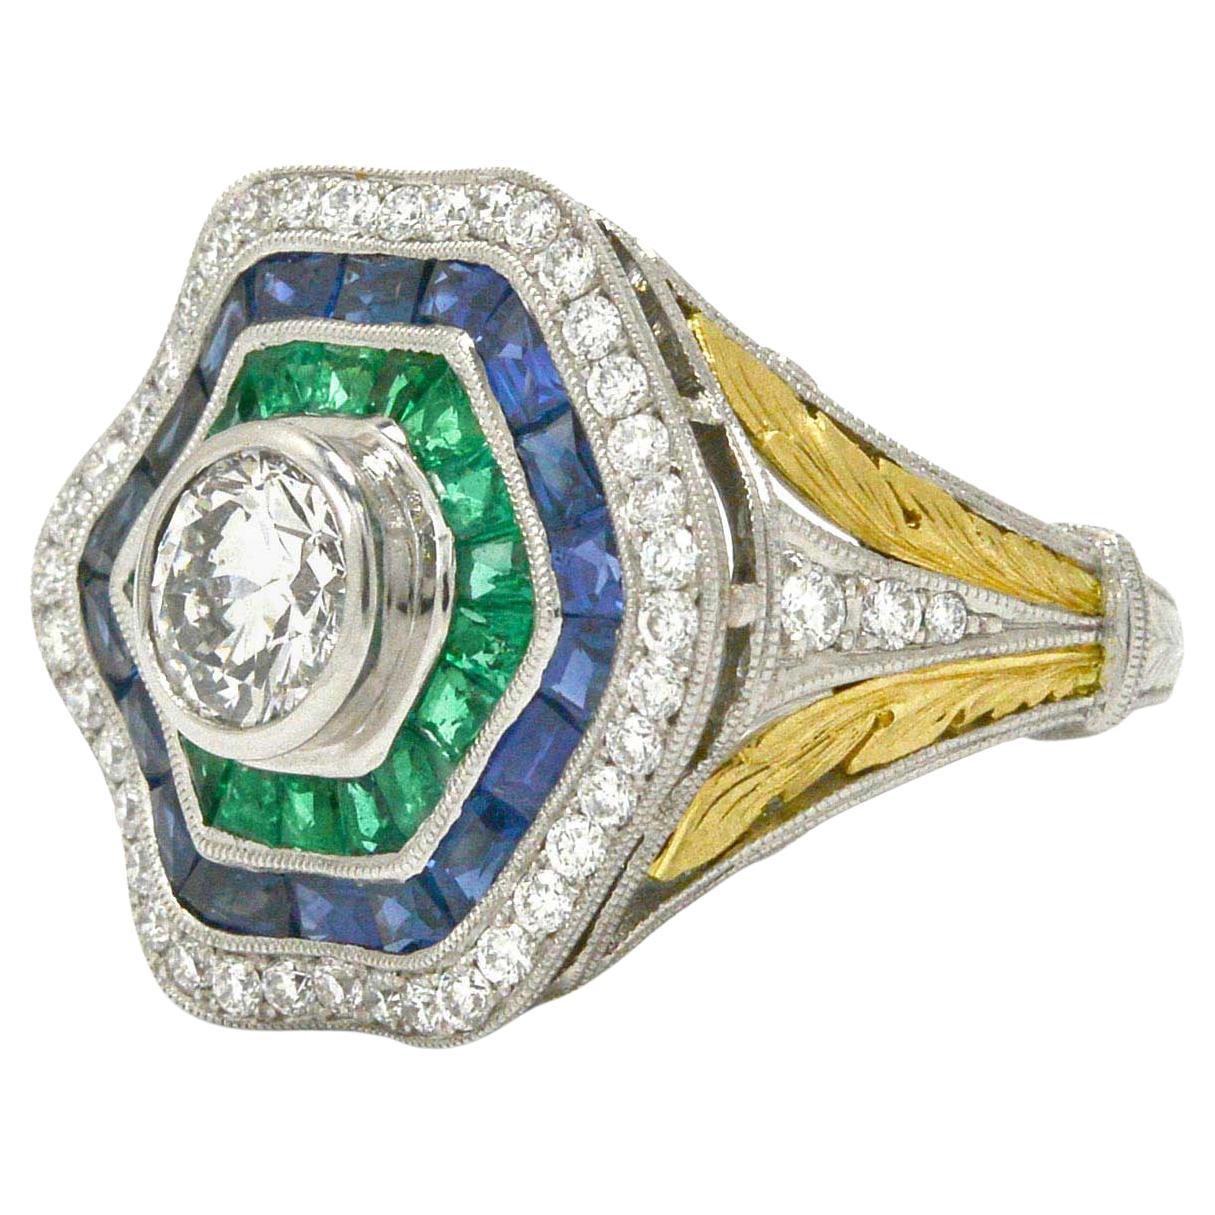 4.35 Carat Diamond Sapphire Emerald Ballerina Ring EGL Certified For Sale